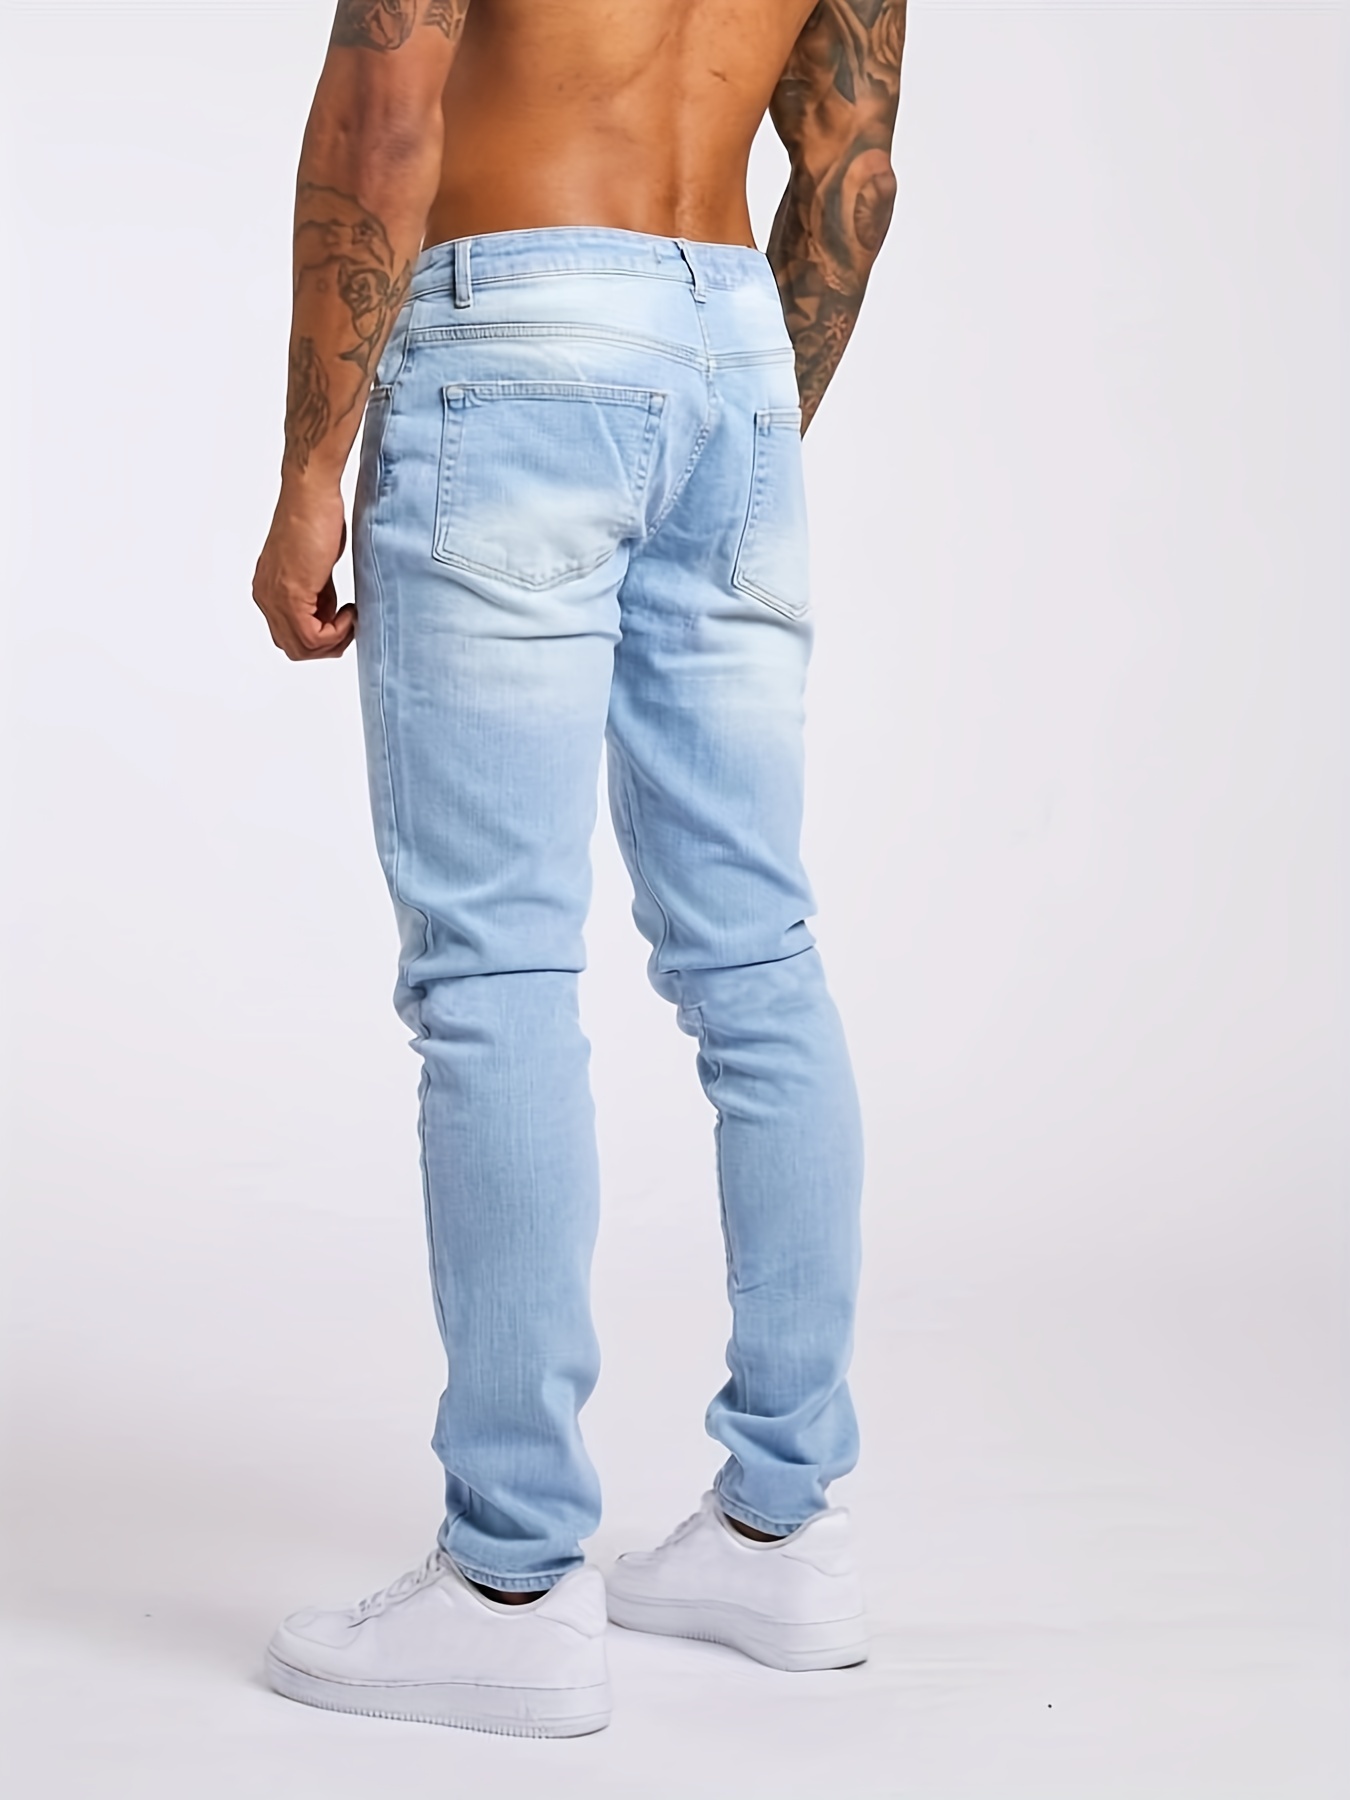 Jack & Jones Mens Denim Jeans Slim Fit Stretch Blue Pants